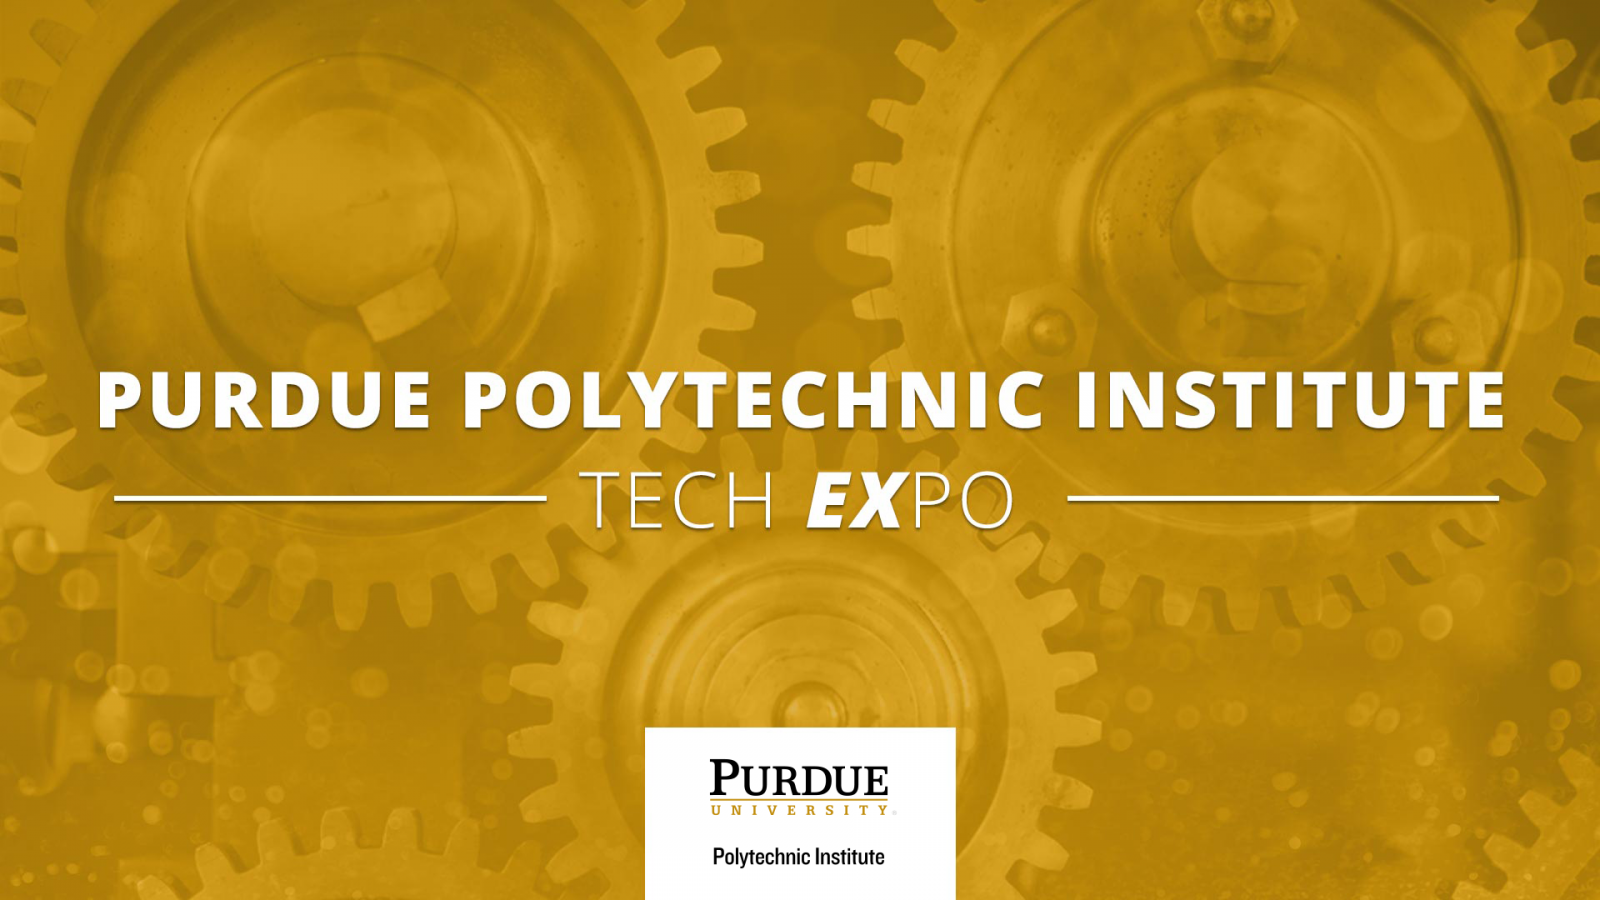 Purdue Polytechnic Tech Expo